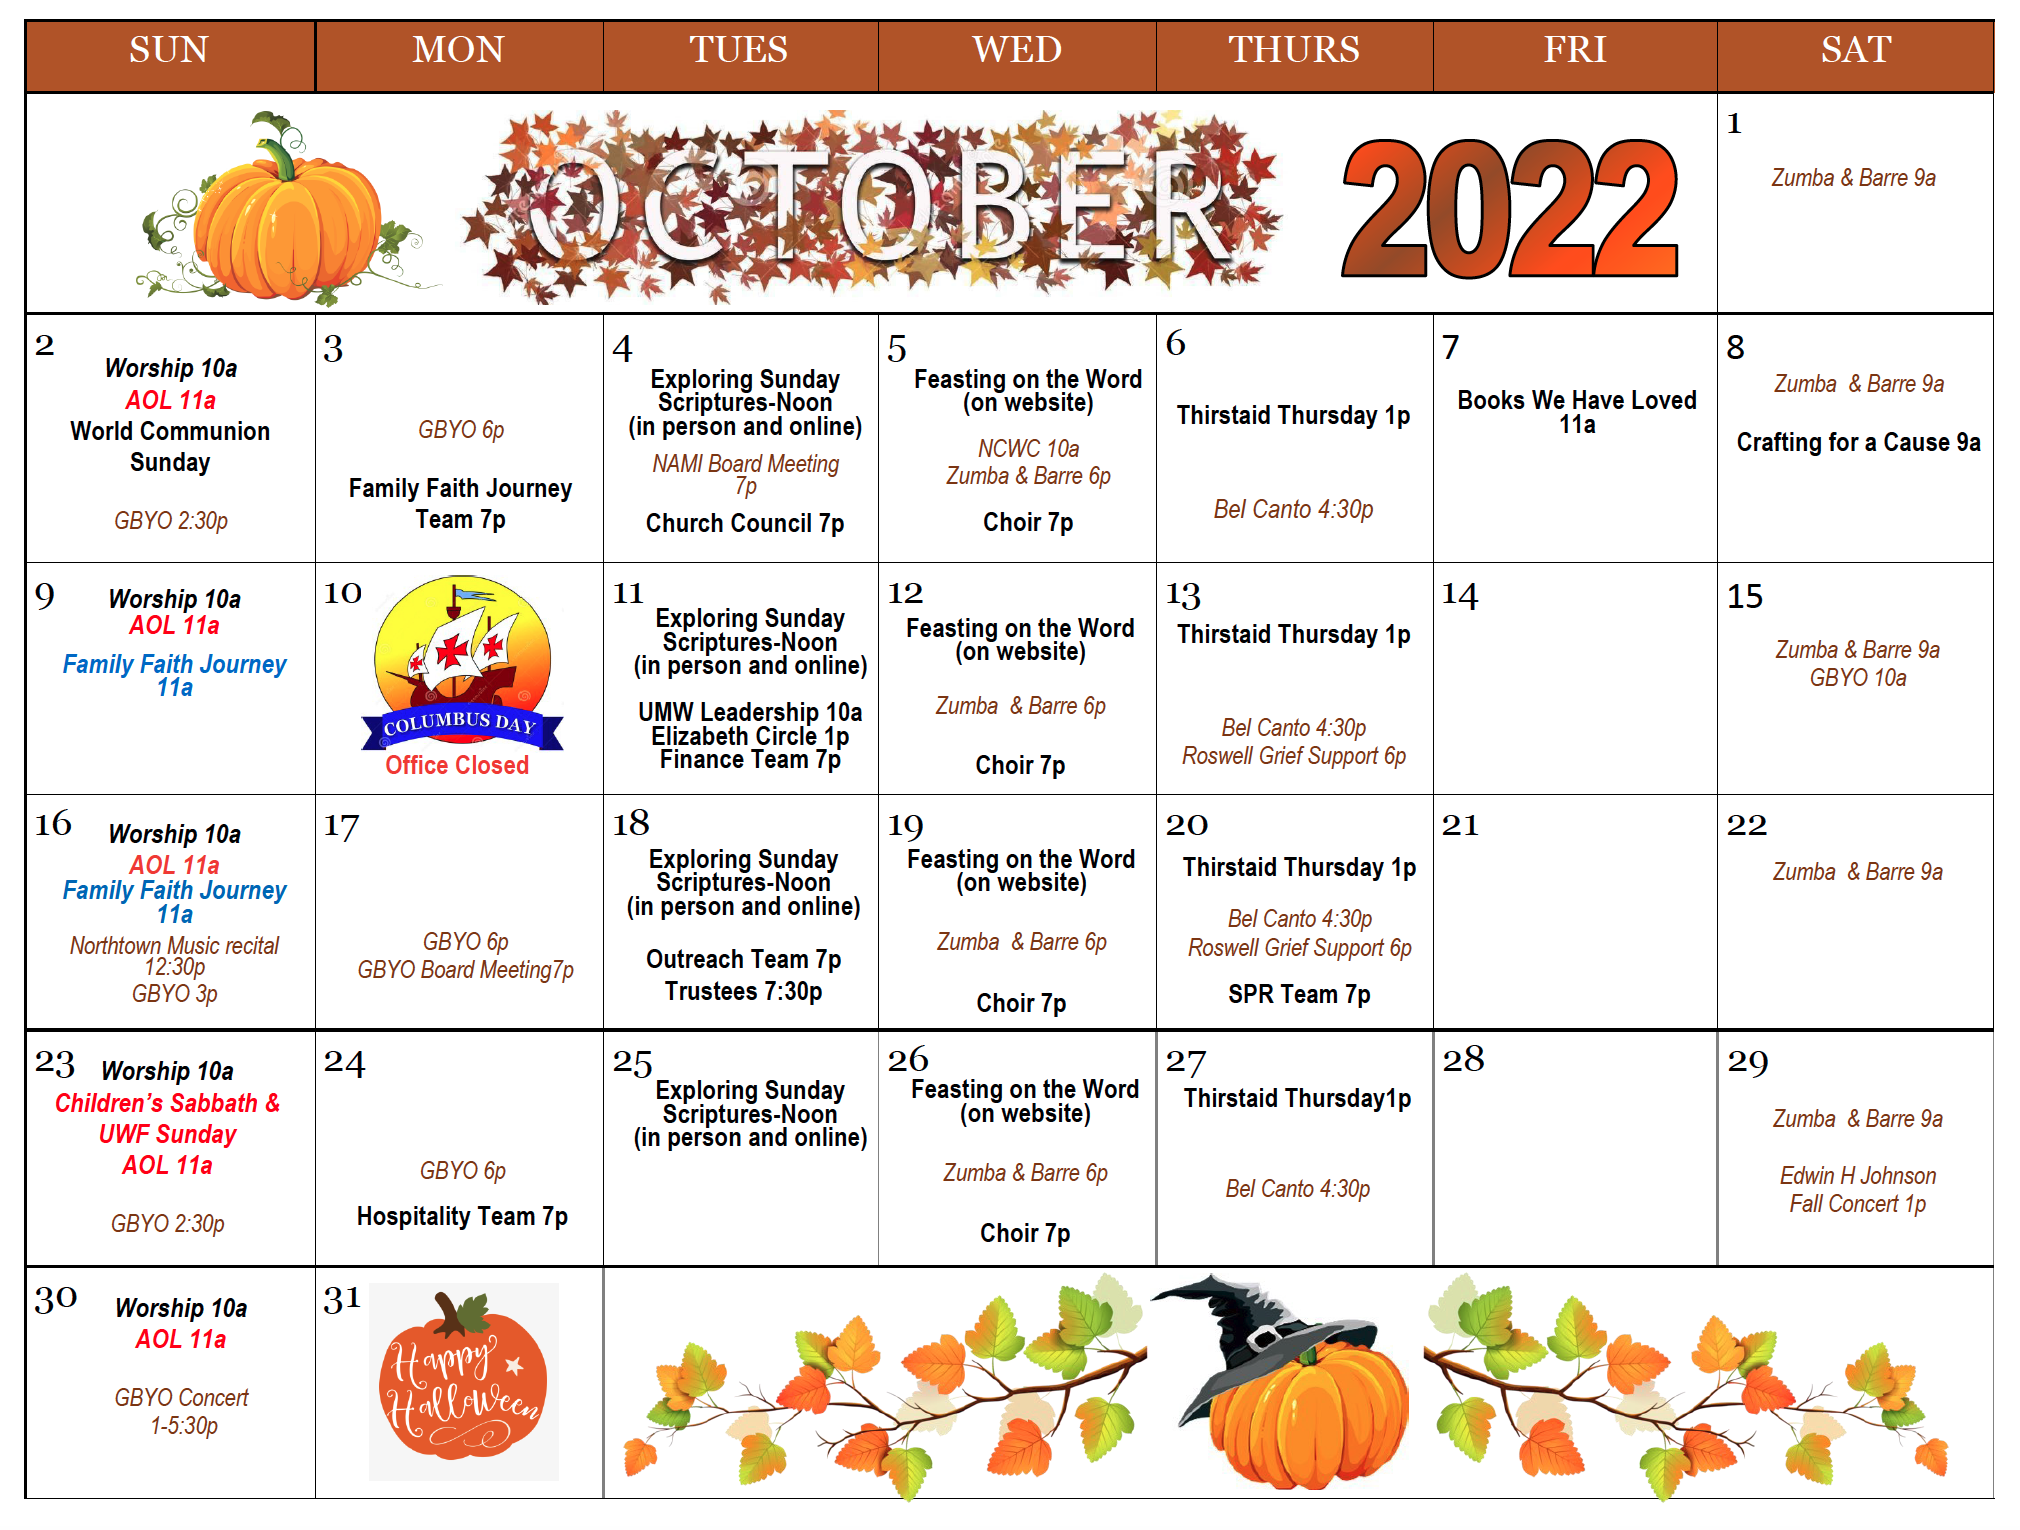 october 2022 calendar